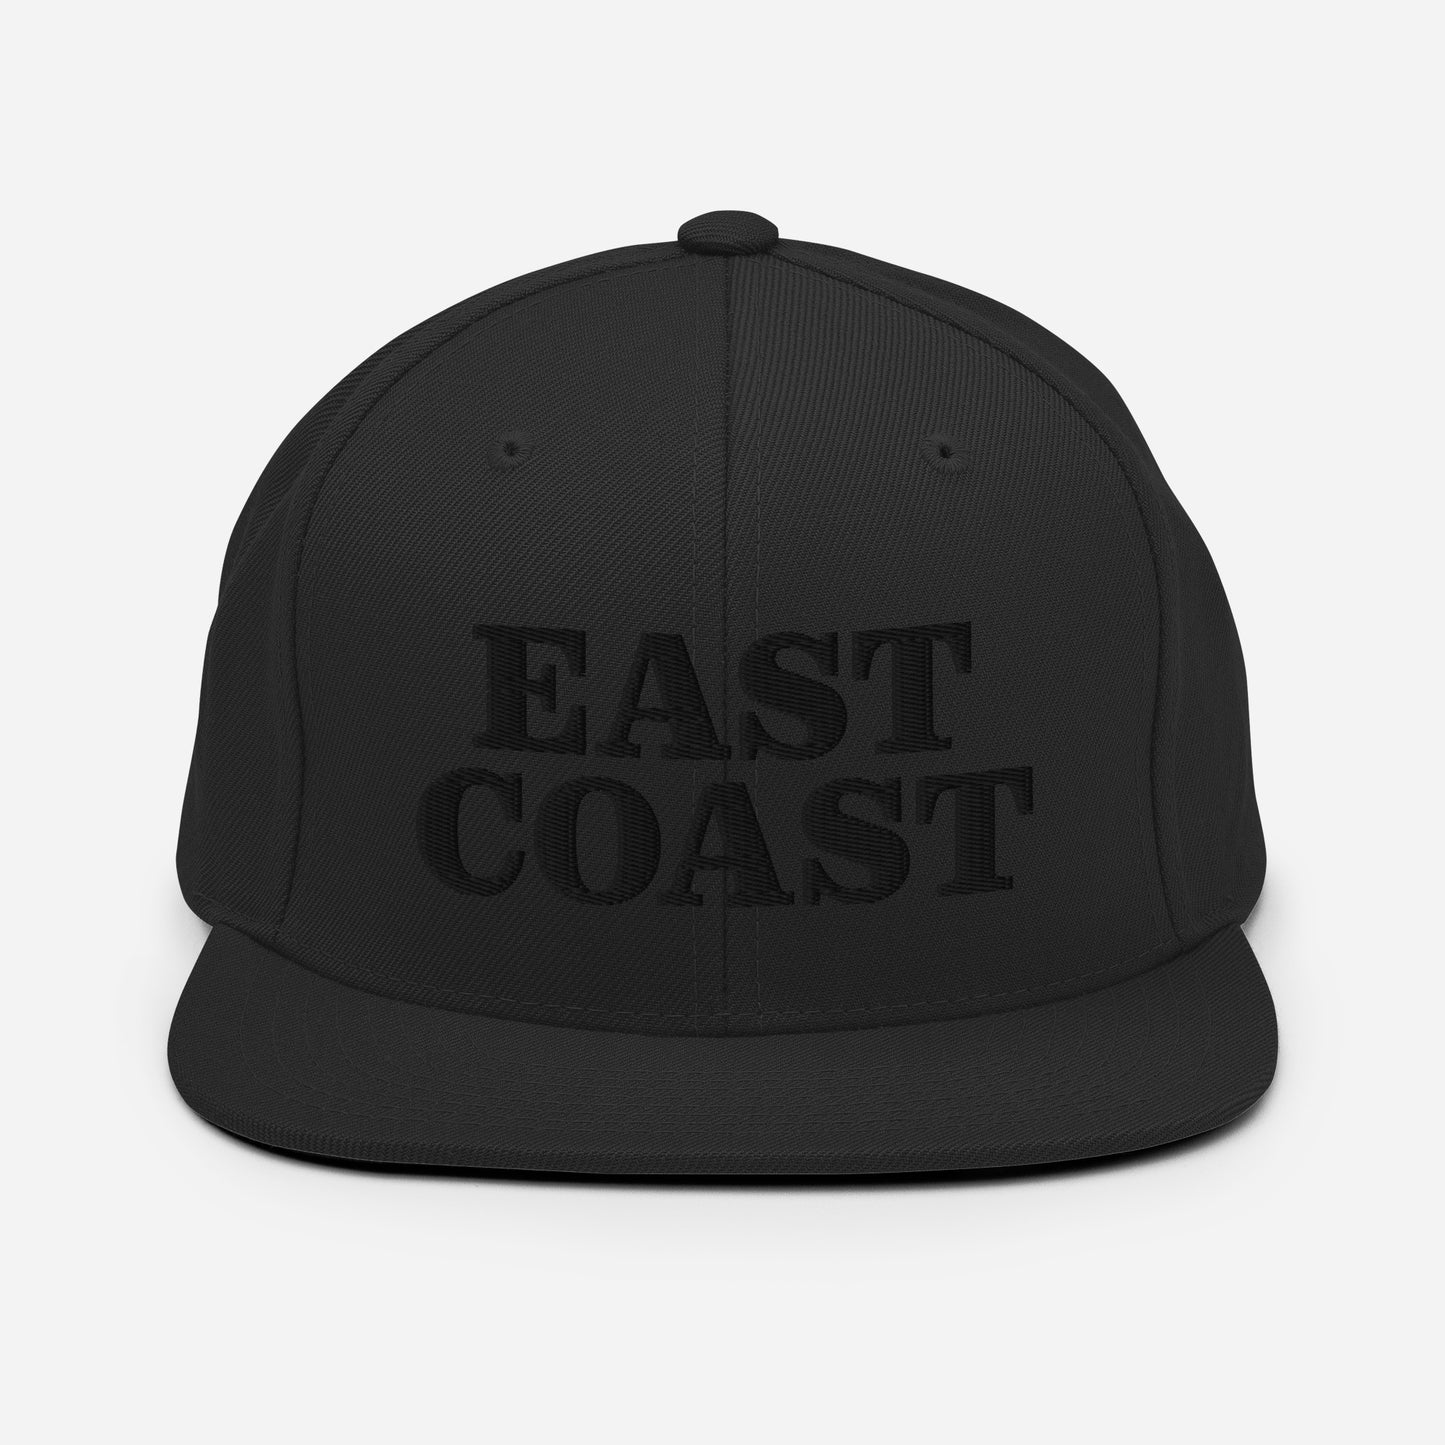 East Coast | Classic Snapback Hat | Embroidered